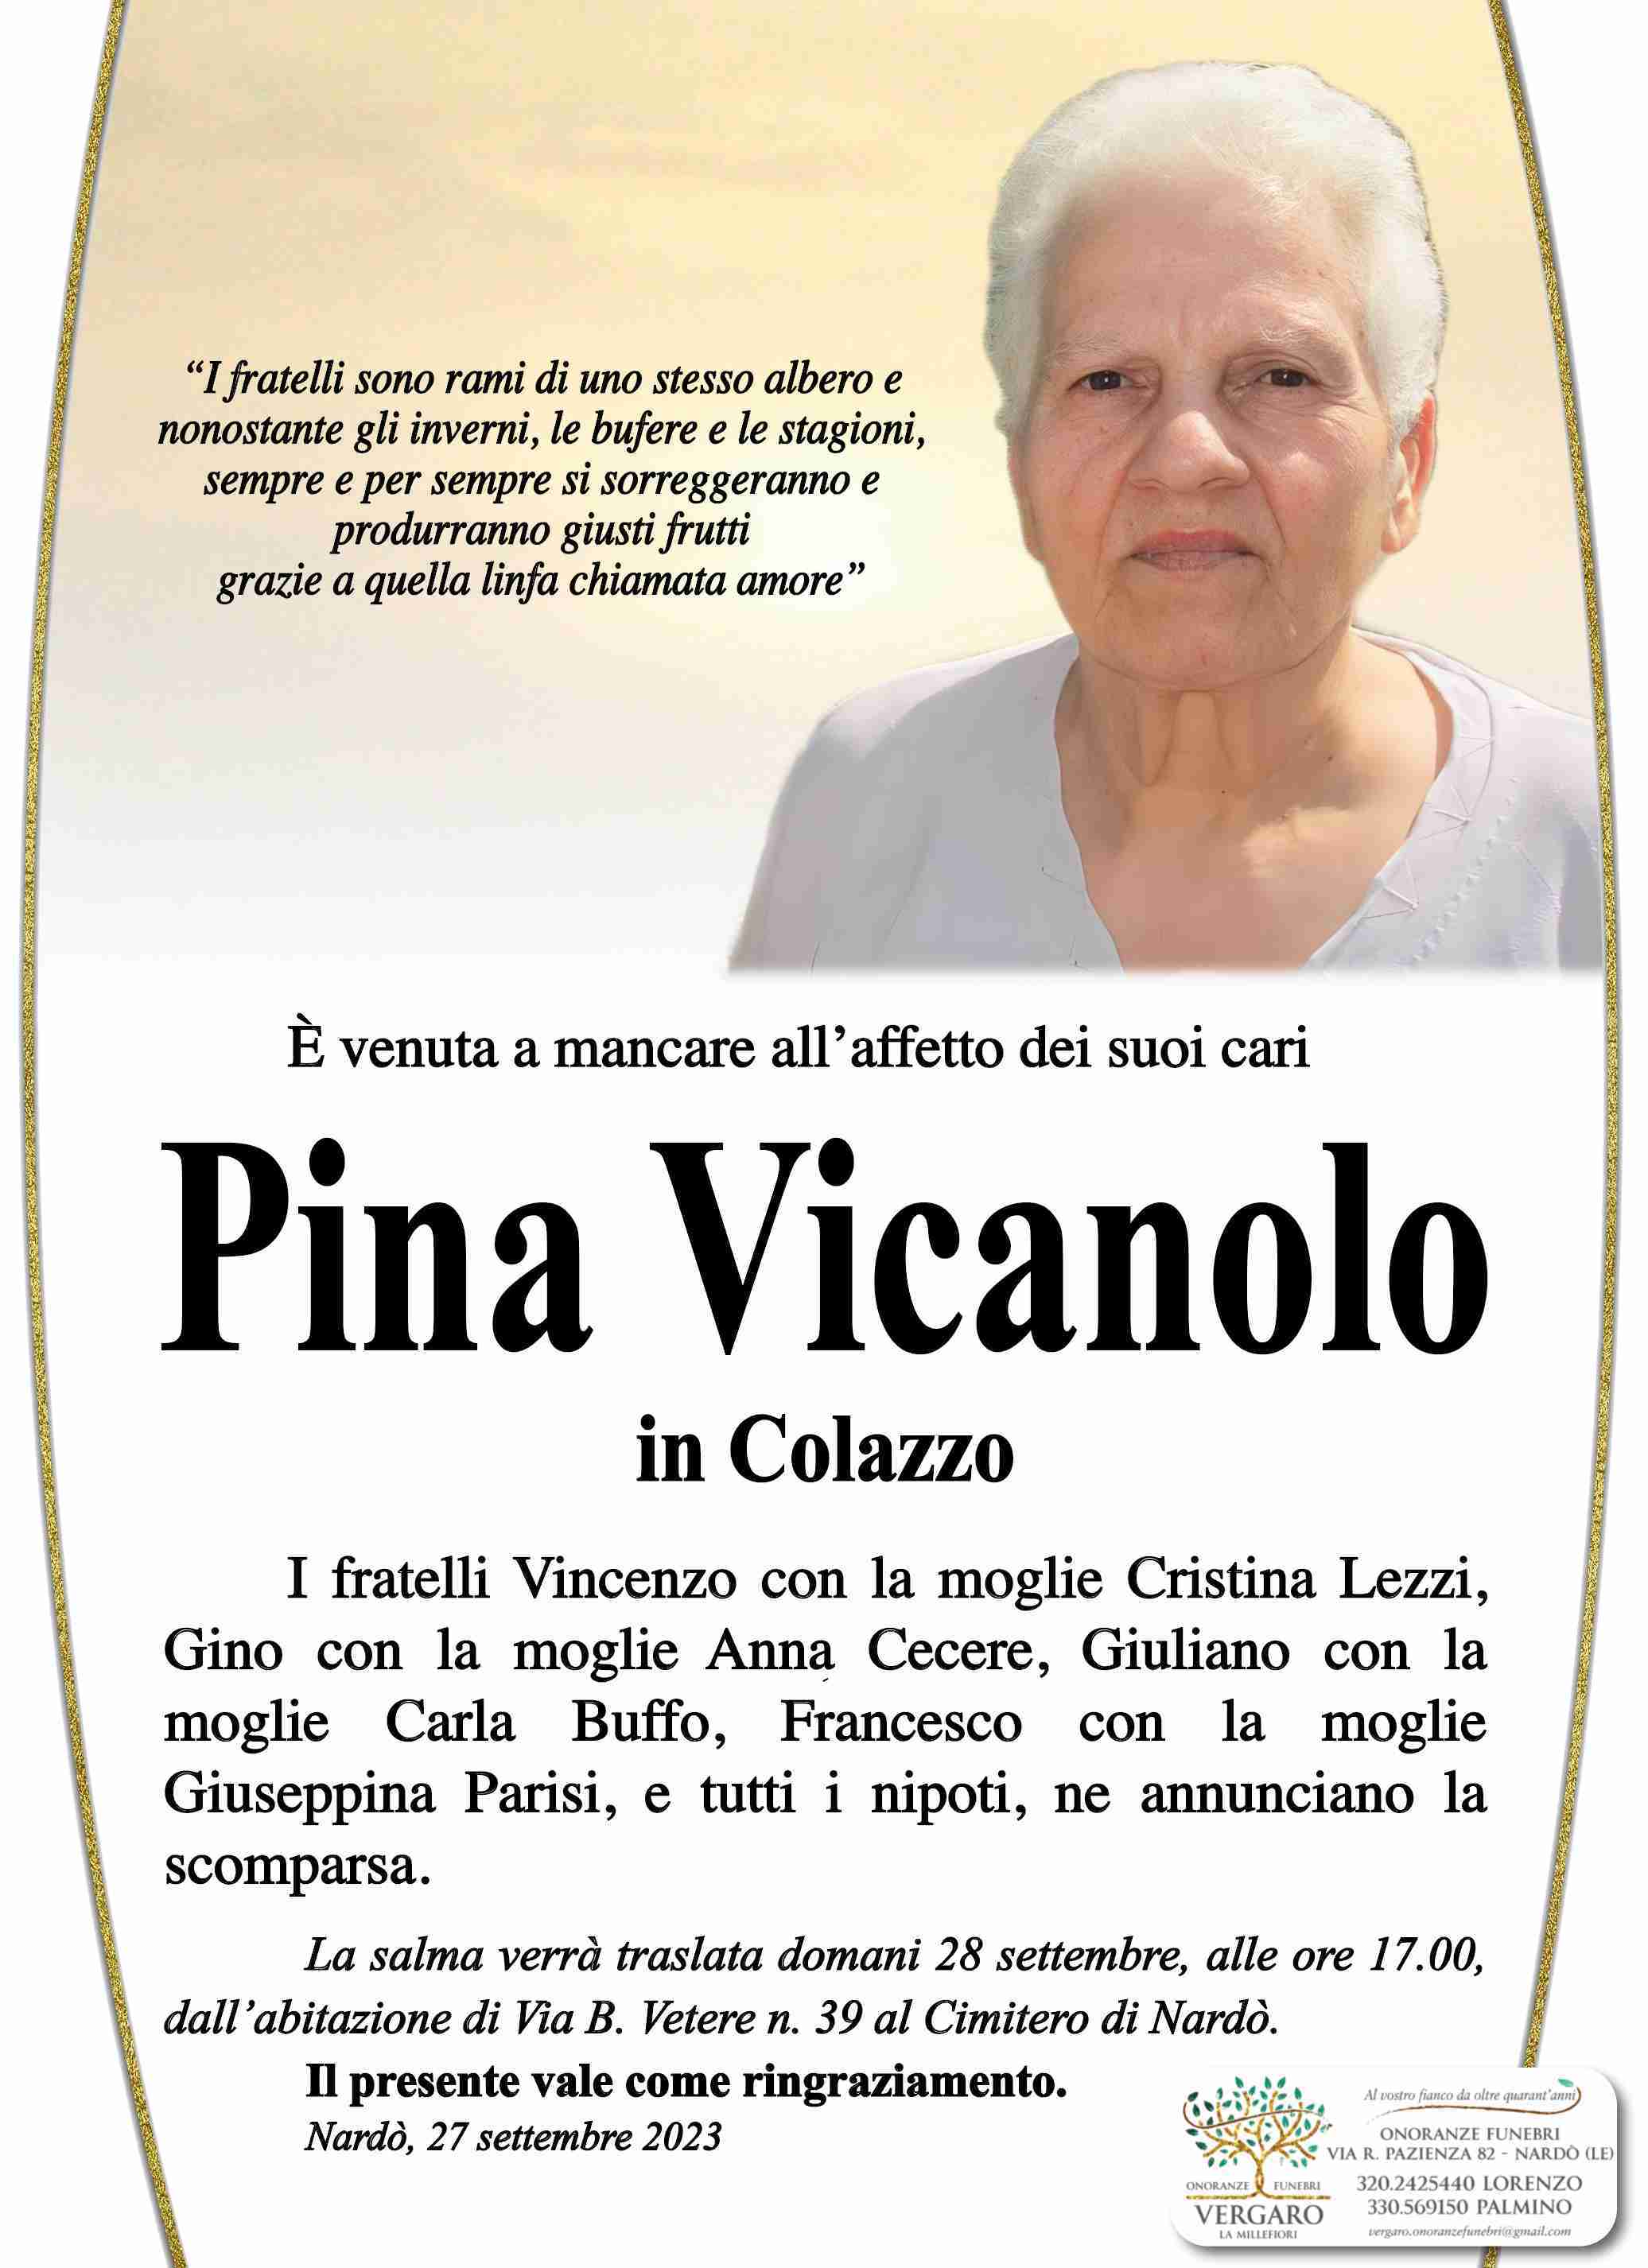 Pina Vicanolo